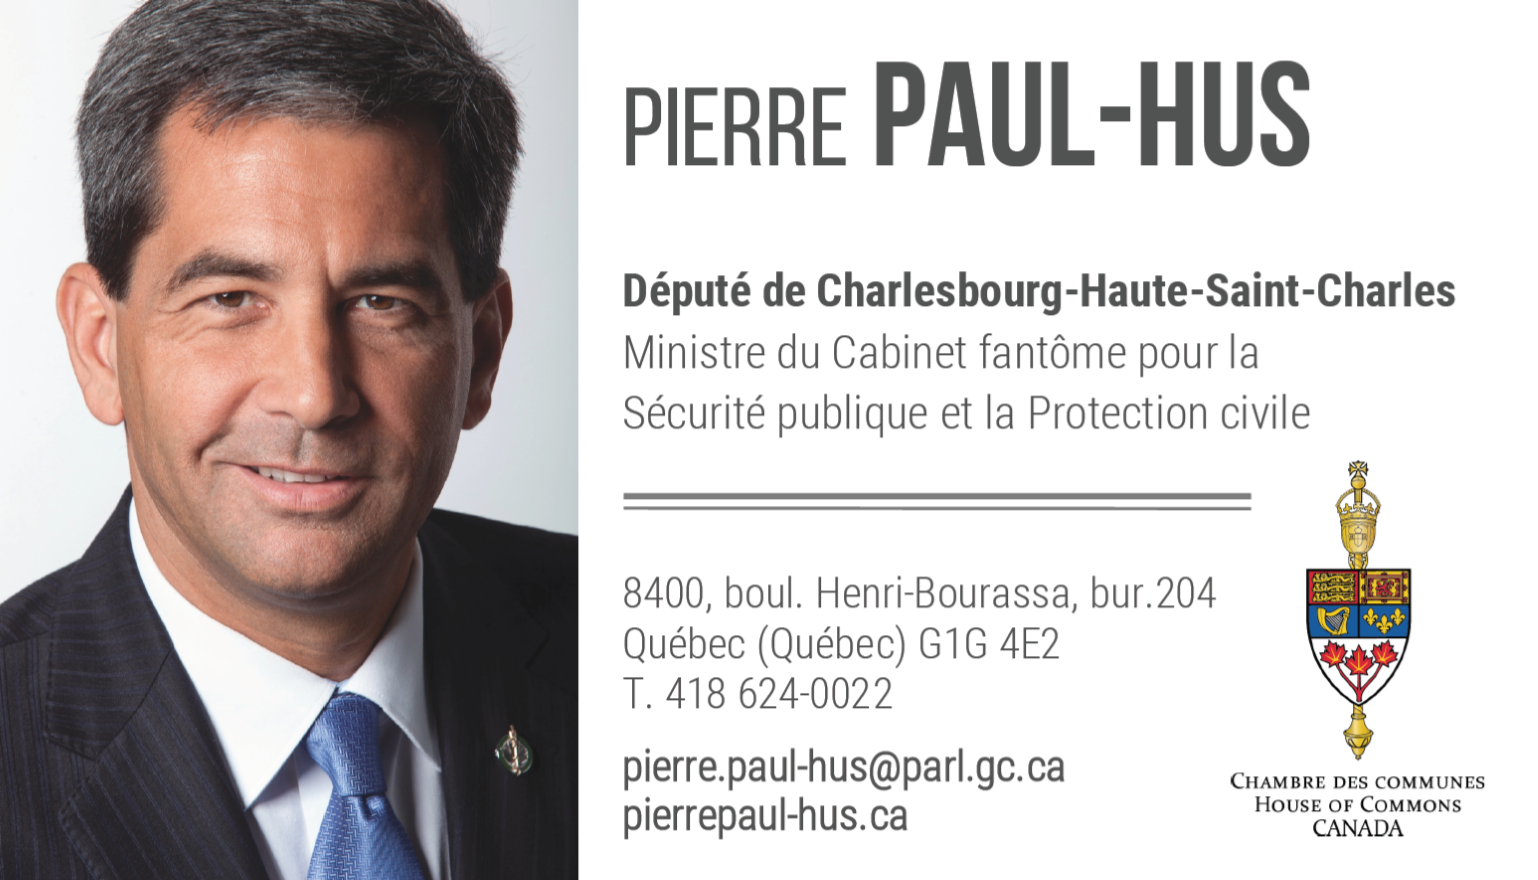 Pierre Paul-Hus